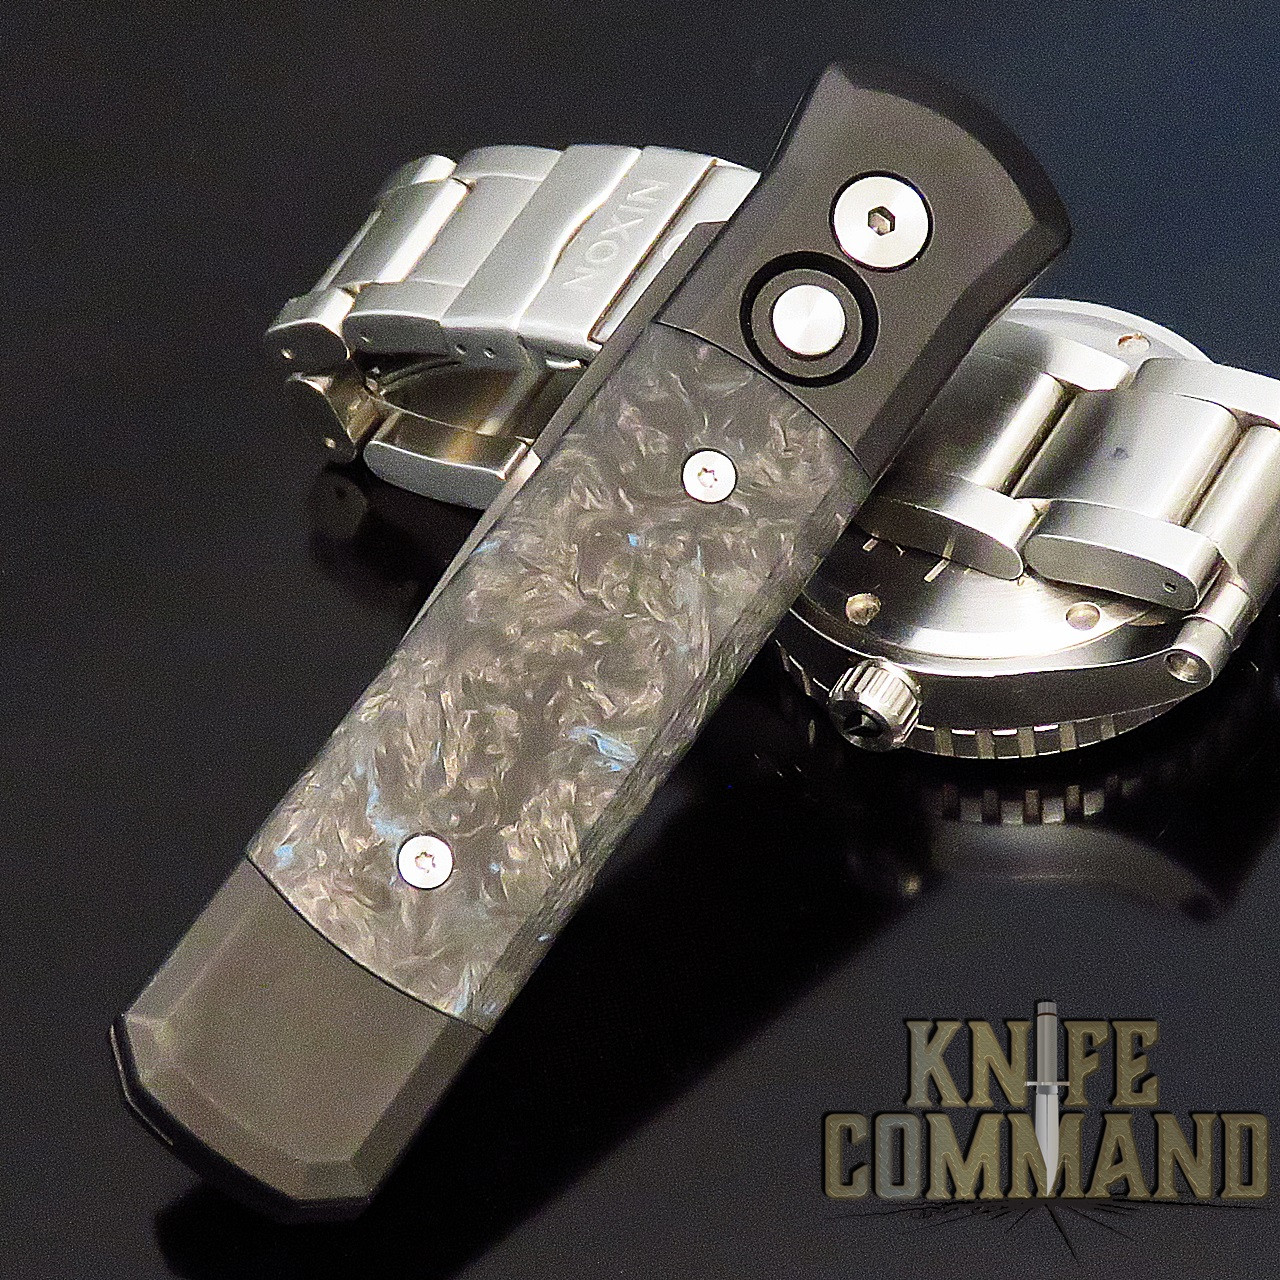 Pro-Tech Knives Godson Automatic Knife 7FC31 Folder Fat Carbon Dark Matter and Black with DLC Blade